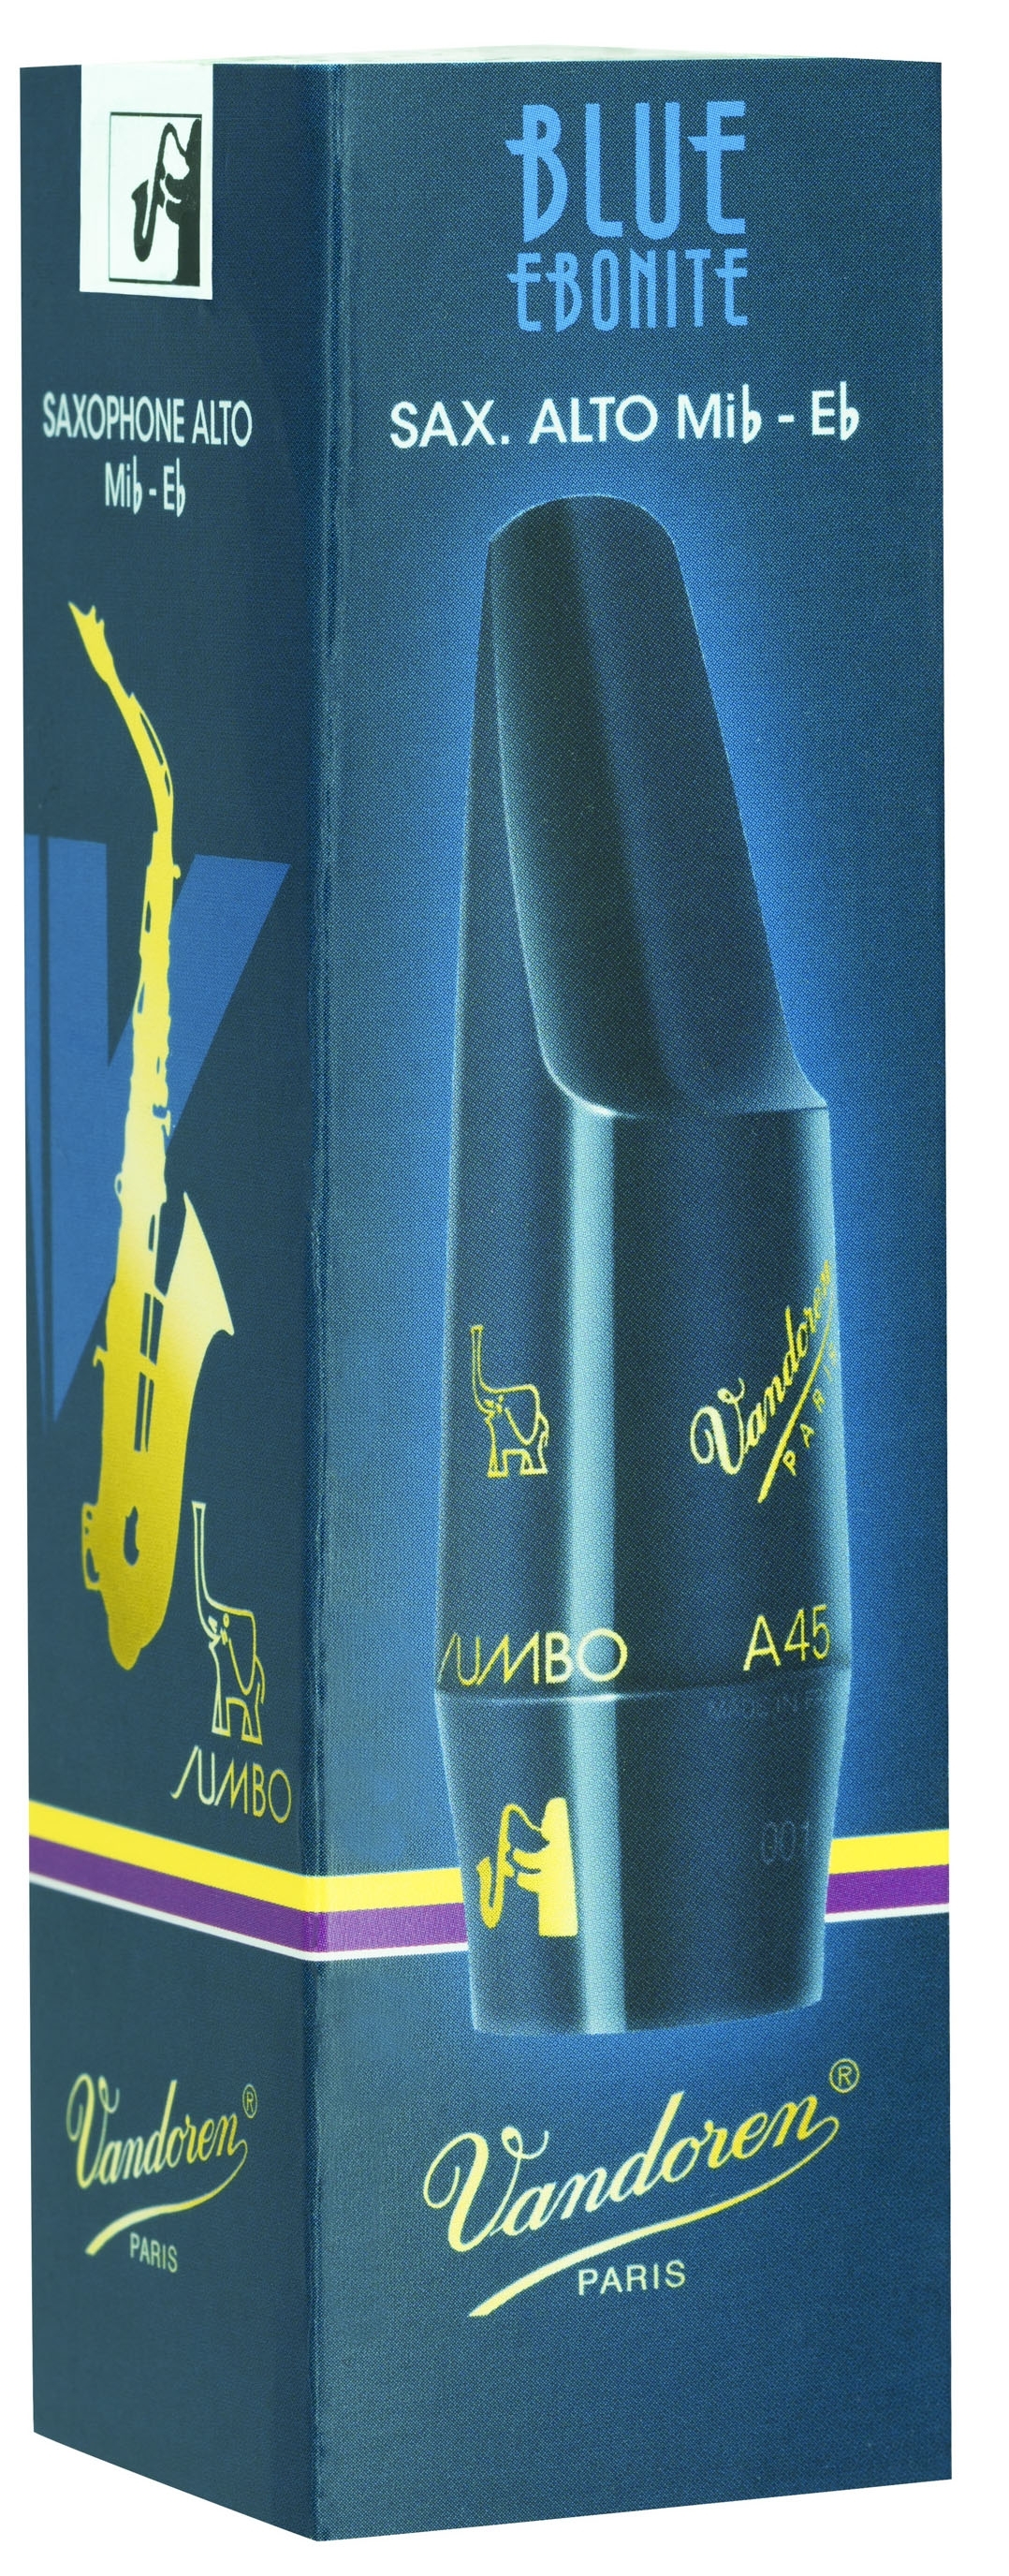 Vandoren Vandoren A45 Jumbo Blue Limited ÉditionAlto Saxophone mouthpiece 